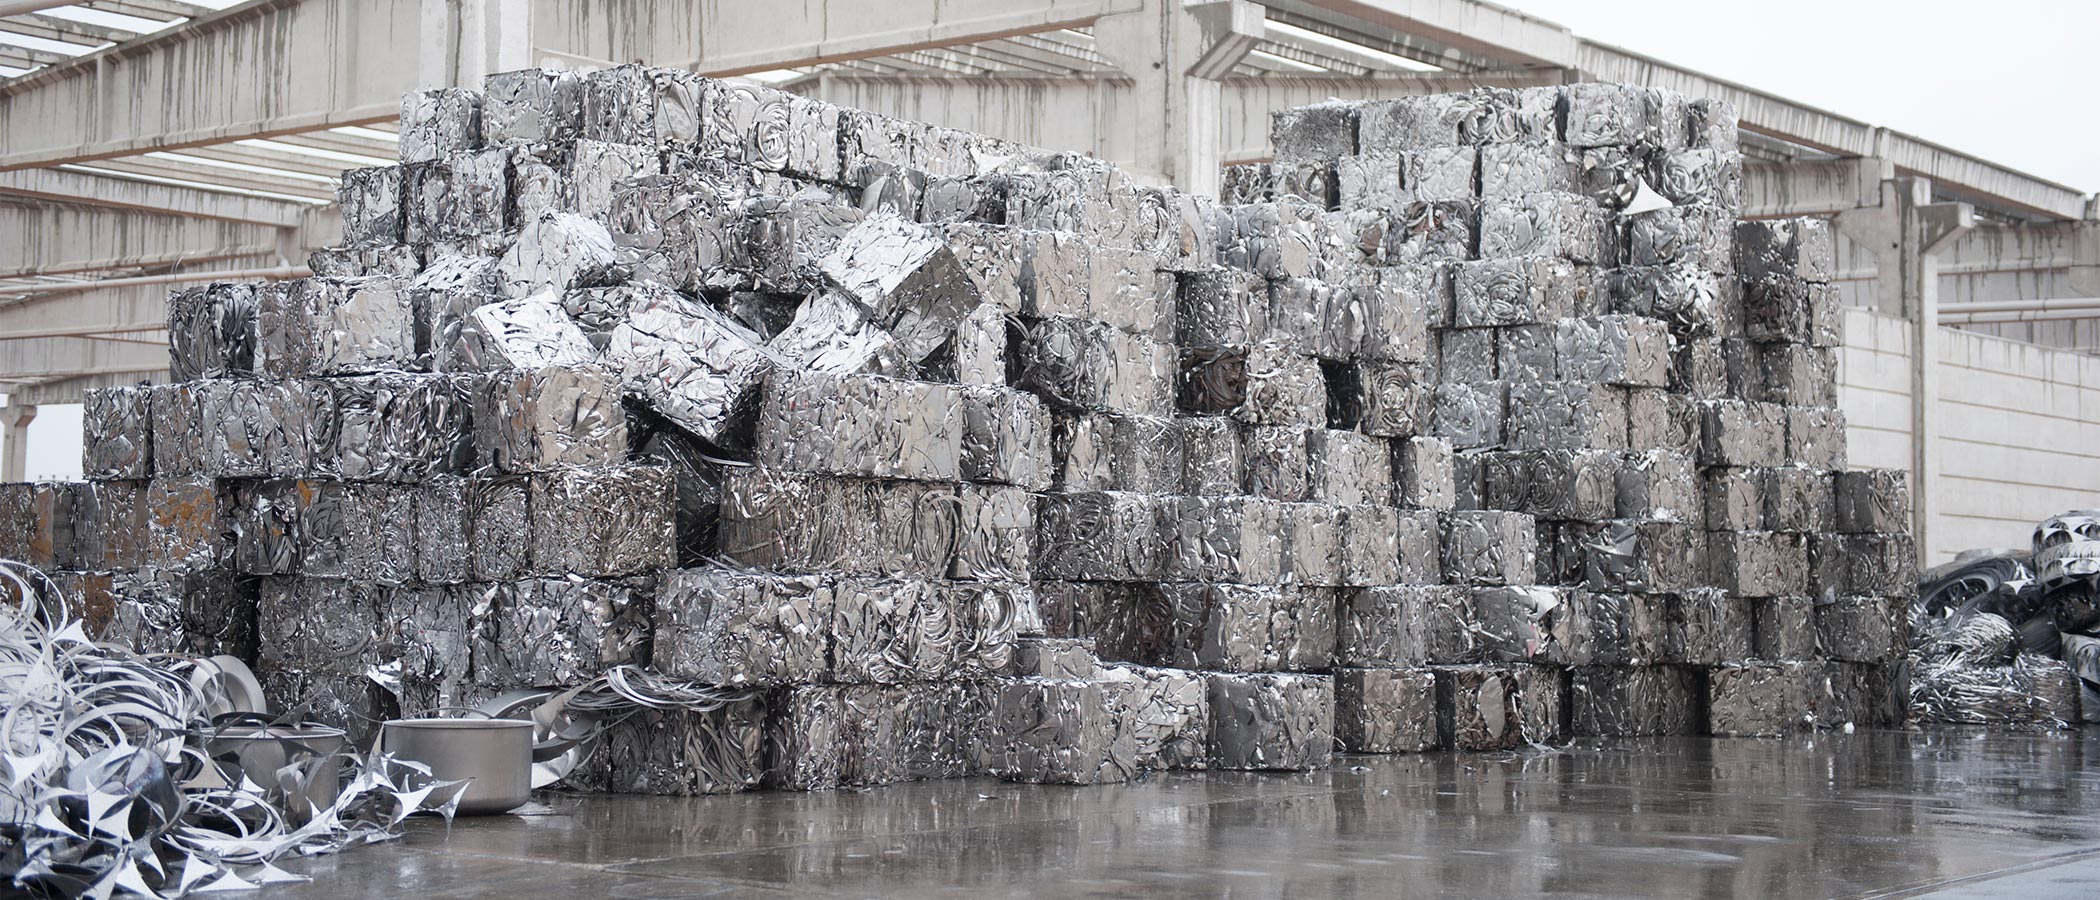 Stacks of aluminium blocks at recycling yard